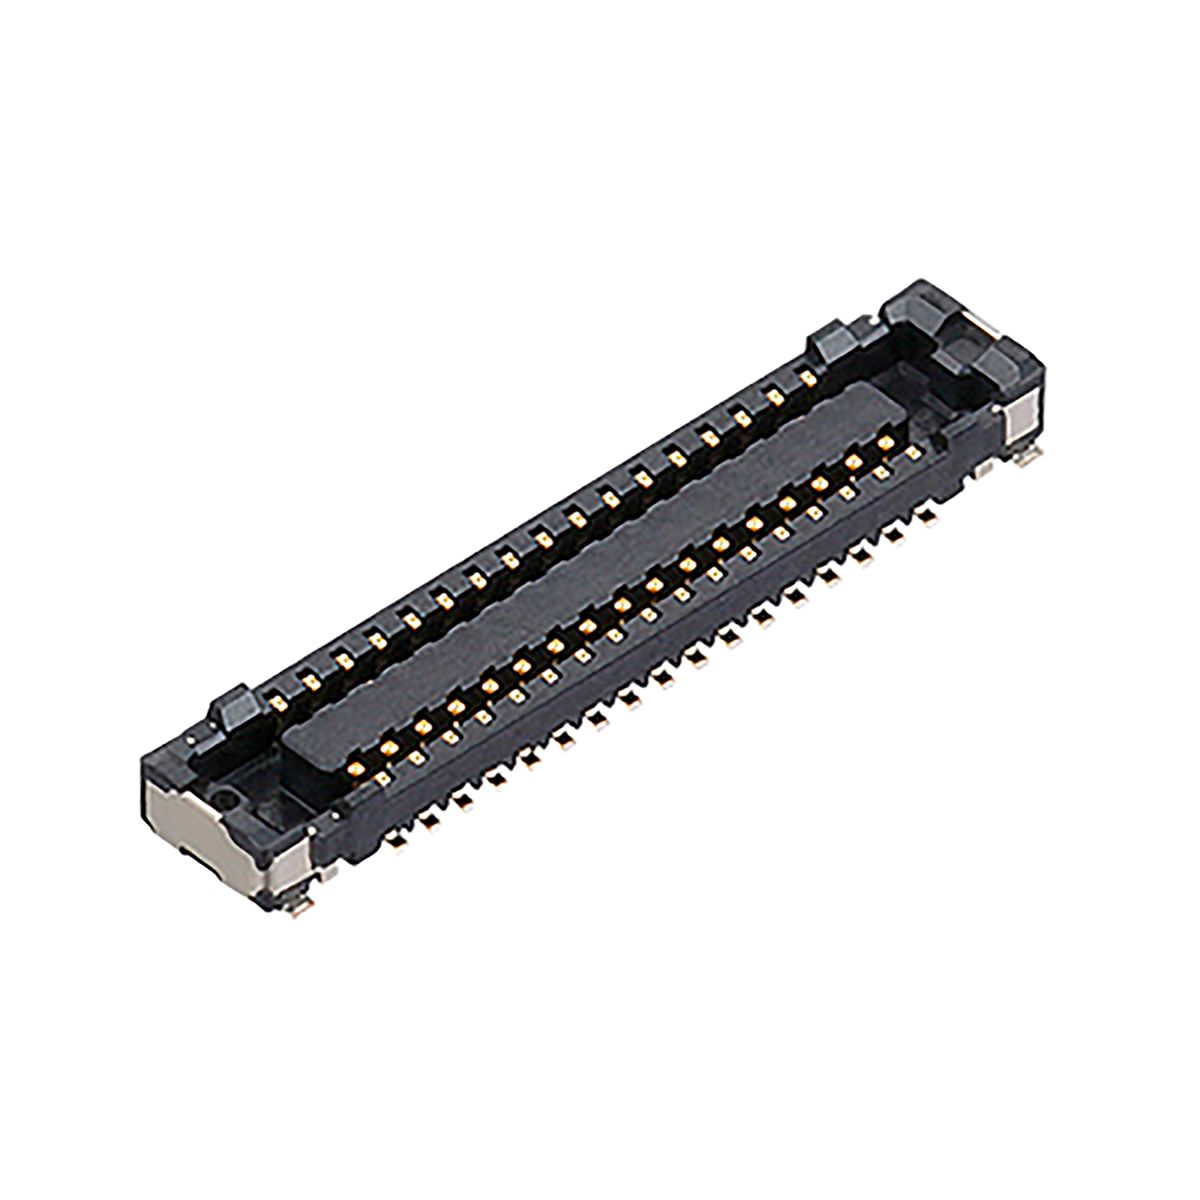 Conector hembra para PCB Panasonic serie S35, de 54 vías en 2 filas, paso 0.35mm, 60 V, 12A, Montaje Superficial, para